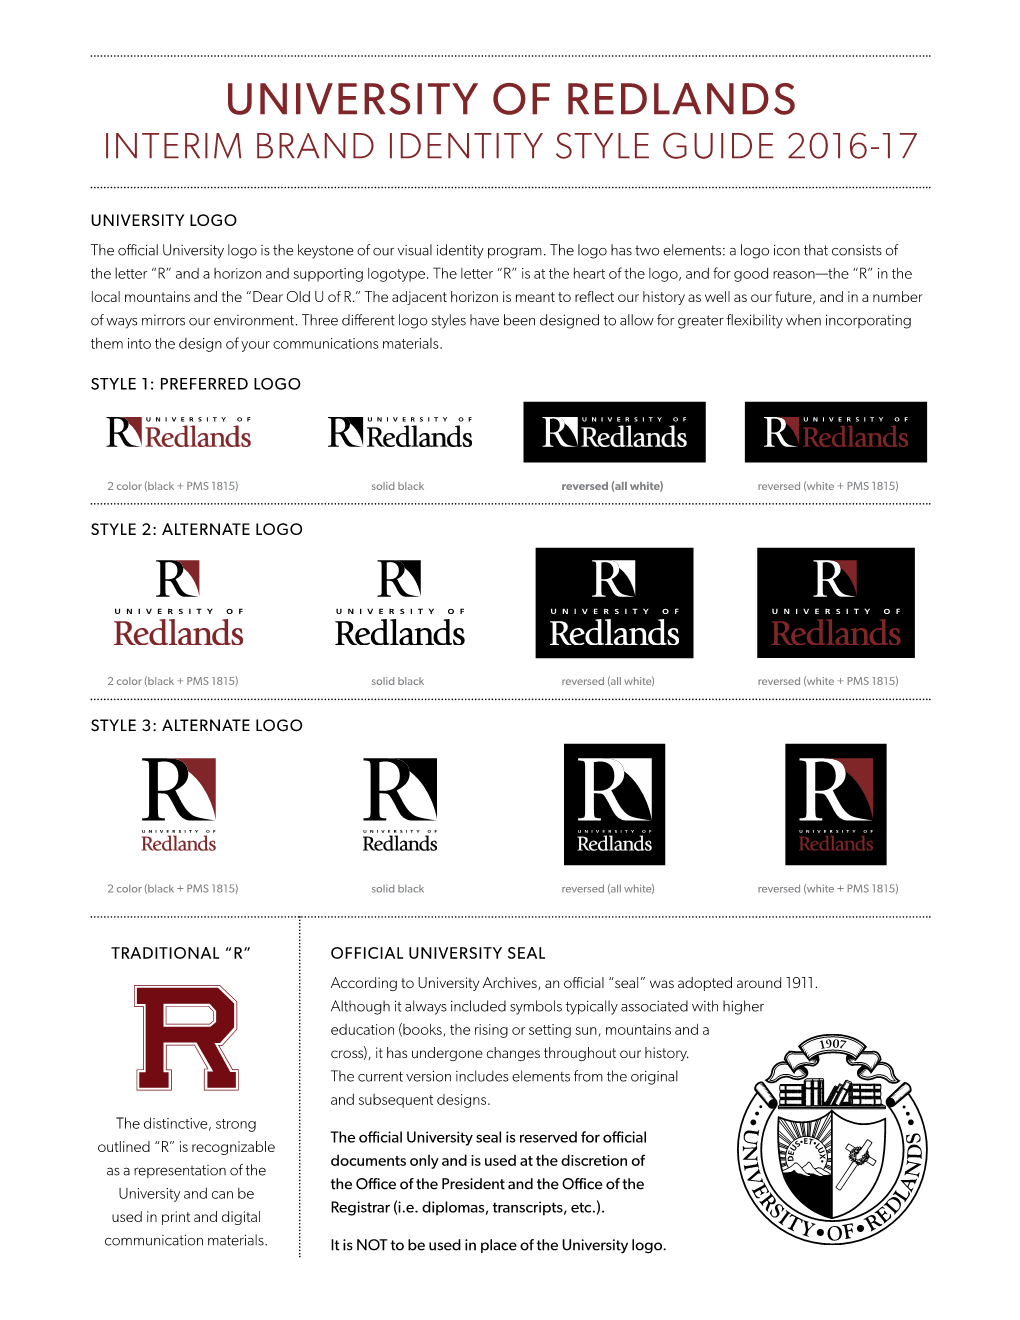 University of Redlands Interim Brand Identity Style Guide 2016-17